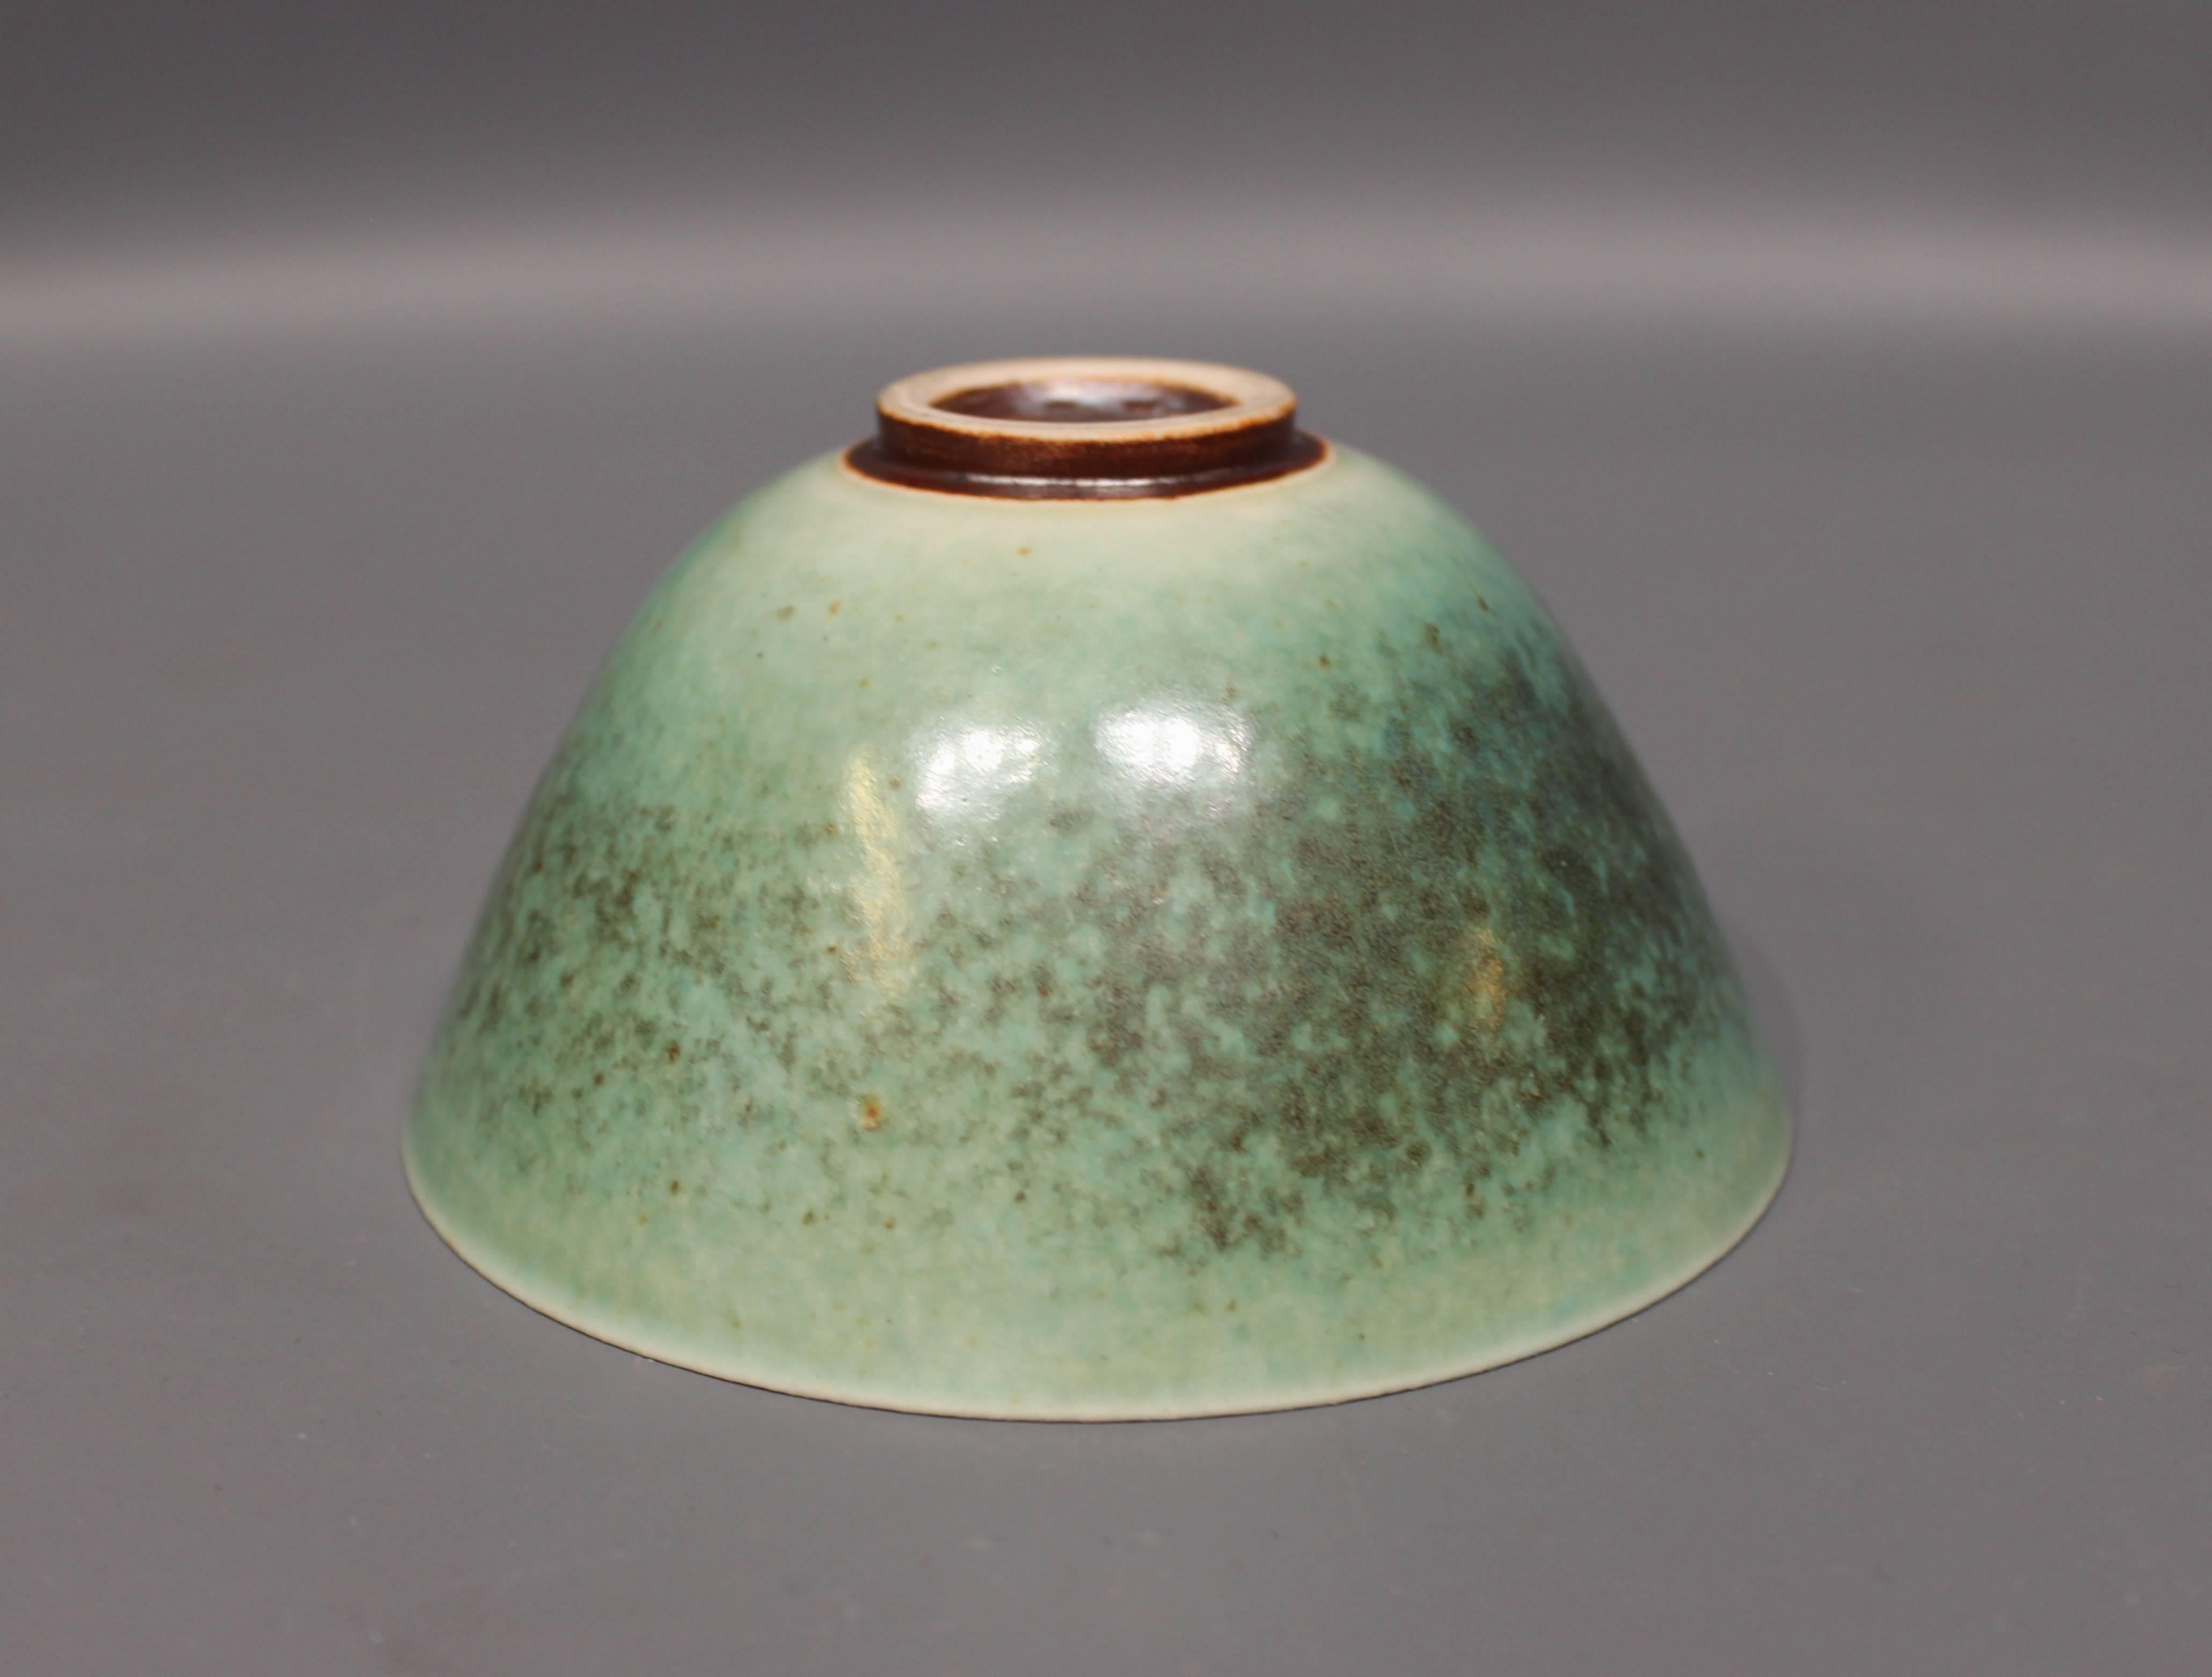 Glazed Ceramic Bowl with a Light Green/Turquoise Glaze, No.: 3 by Saxbo